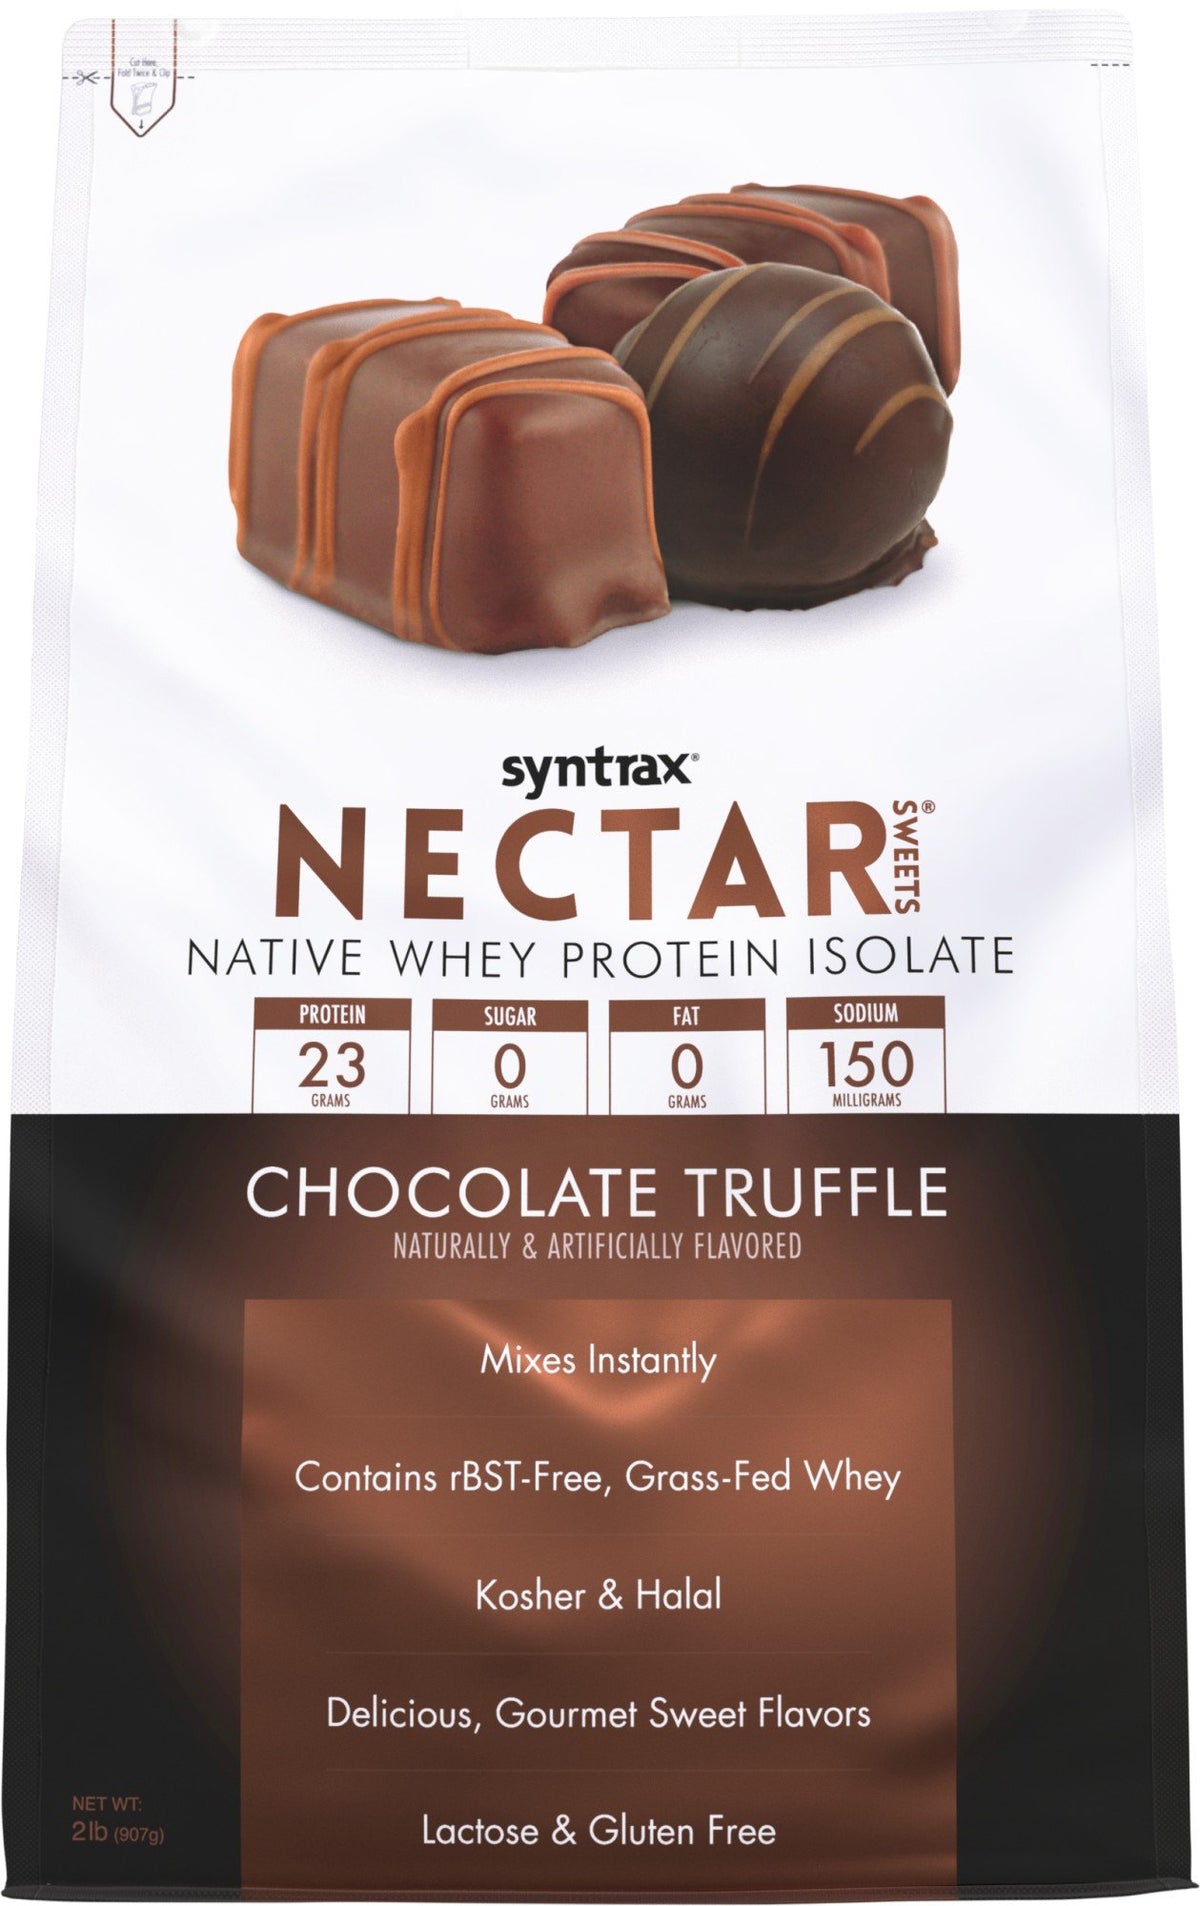 Syntrax Nectar Sweets 2.0: Chocolate Truffle 2 lb Bag